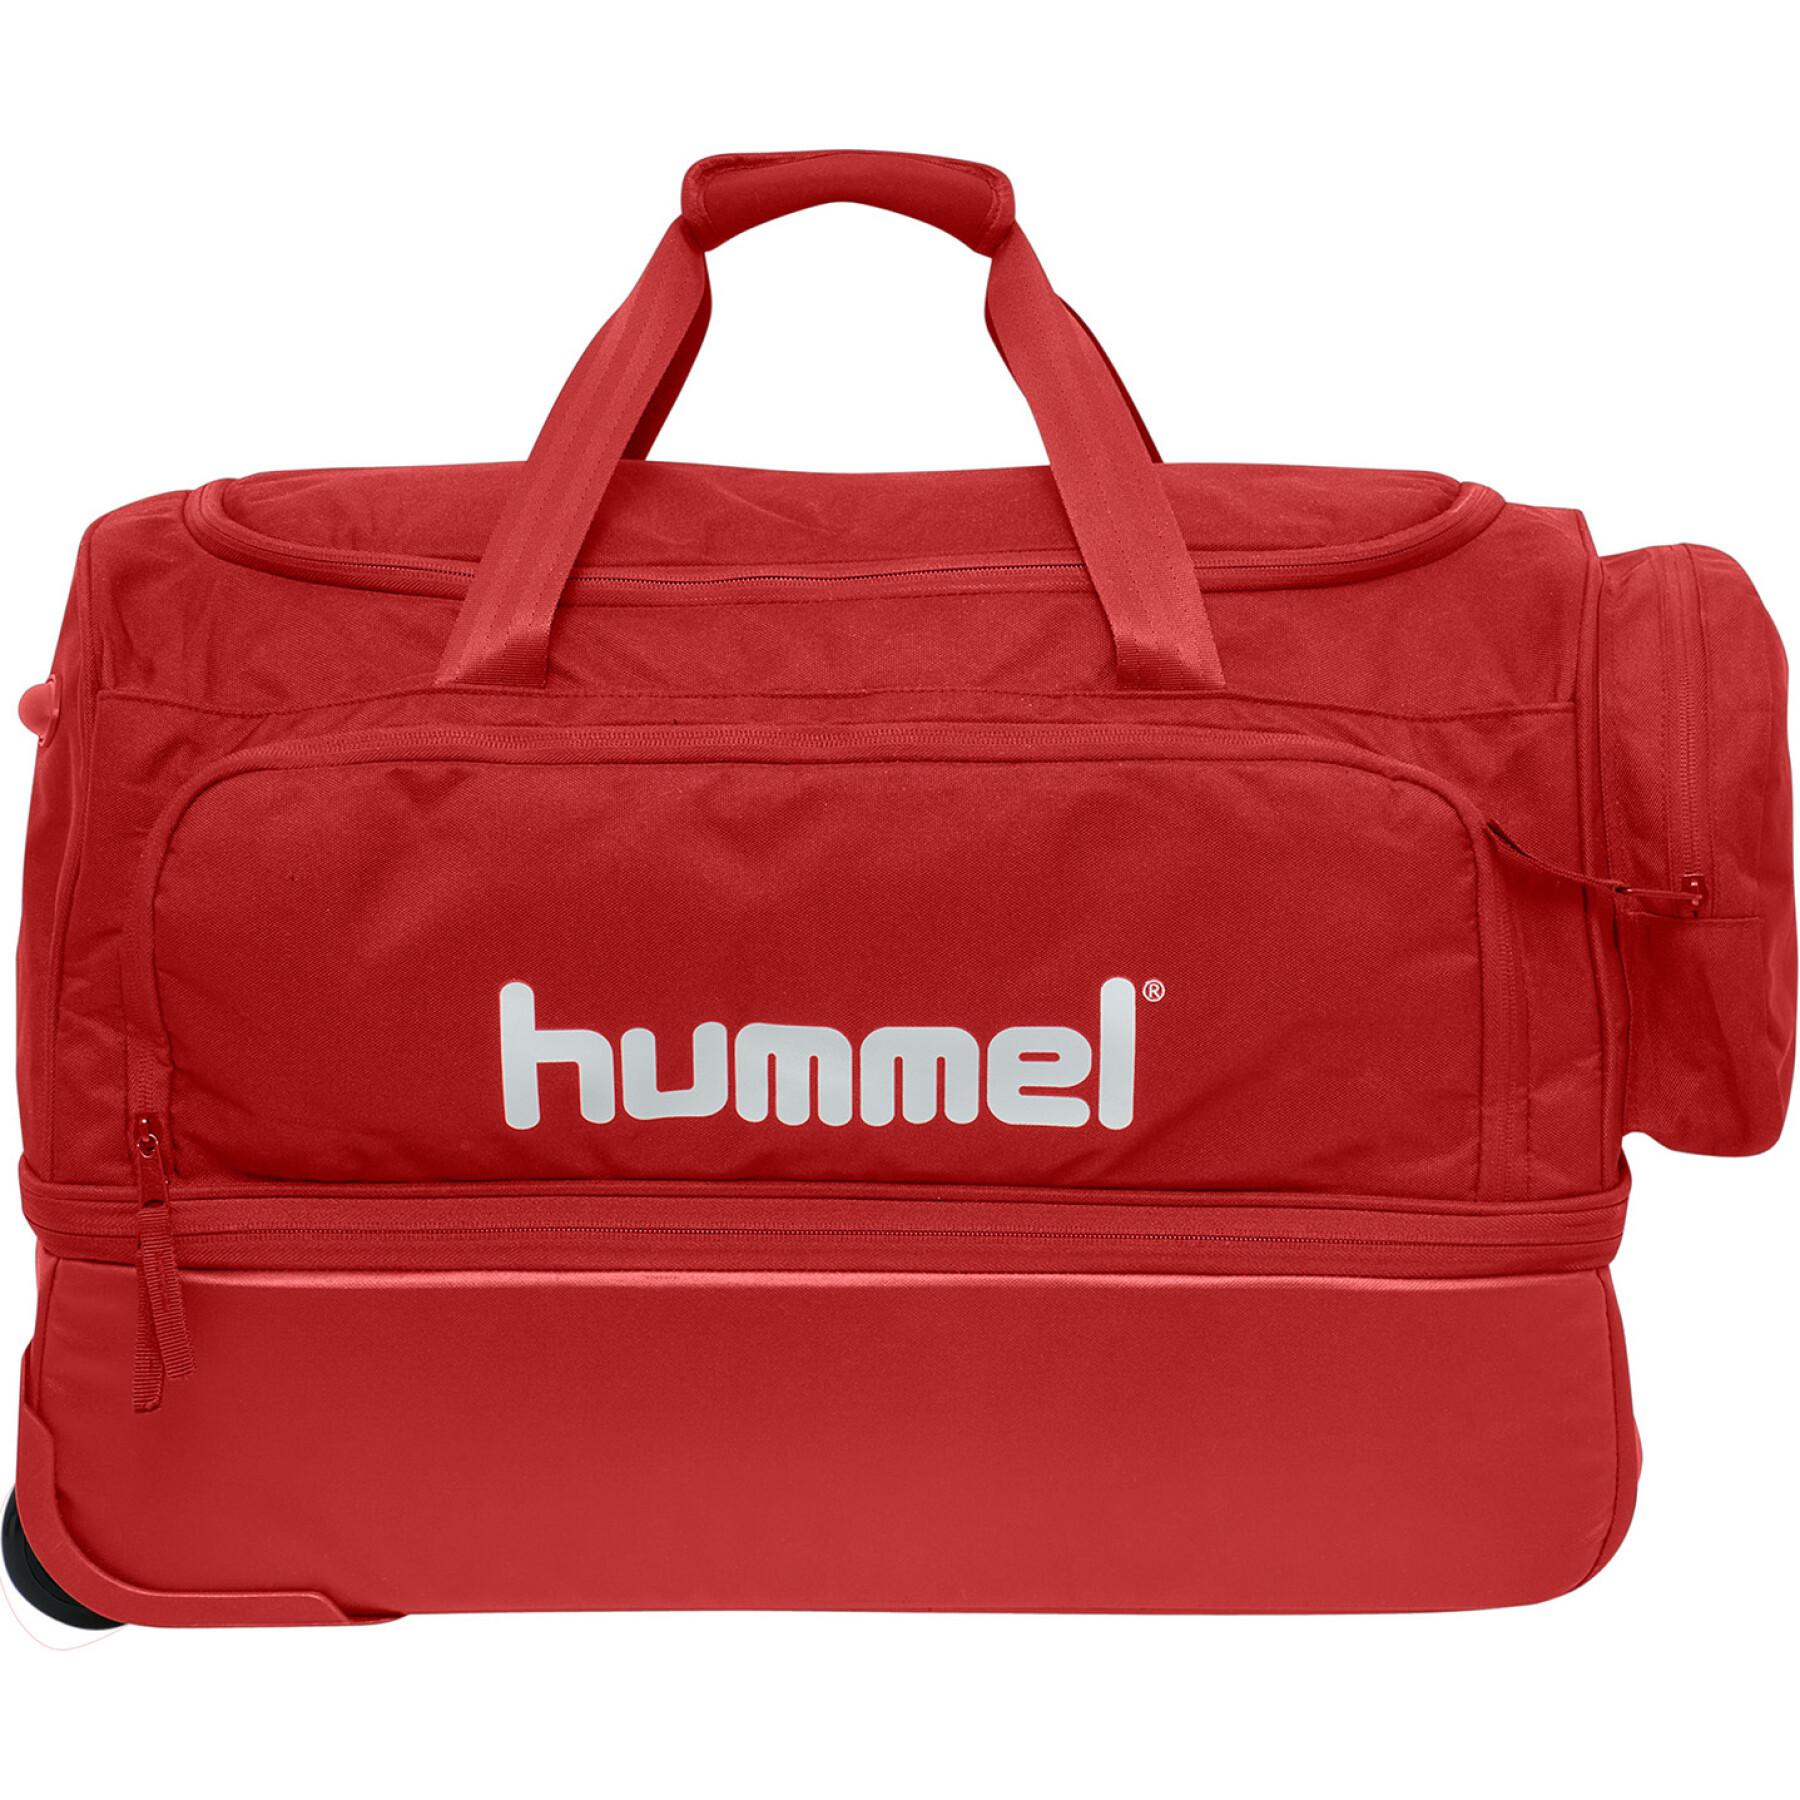 camisetas e tops : Hummel Brasil - Vendendo Hummel ropa, As Hummel